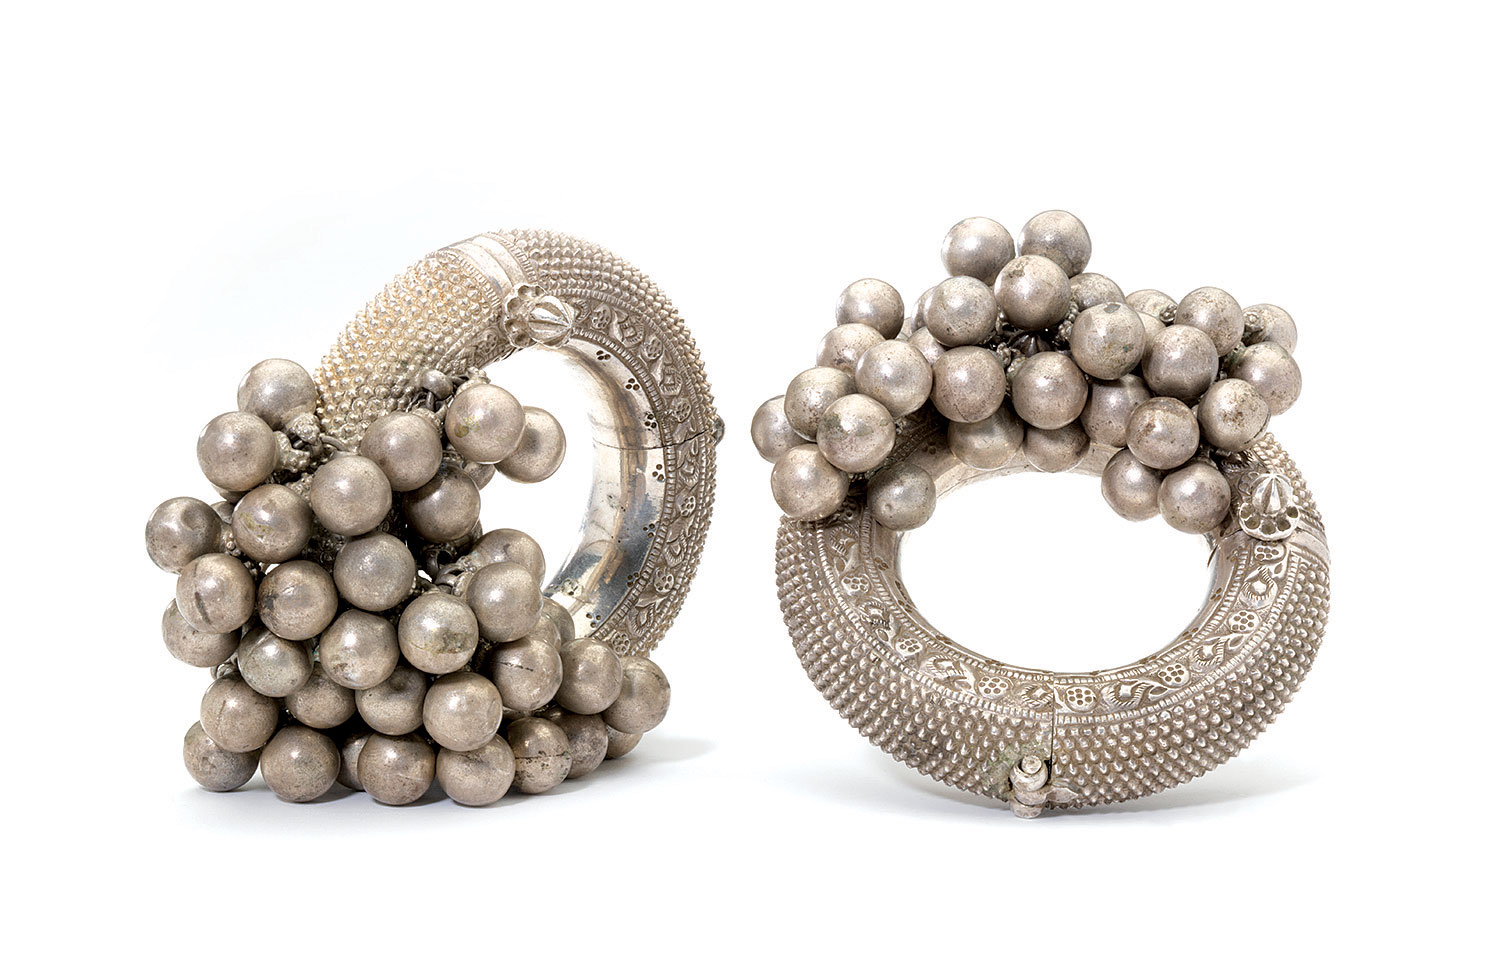 Jewelry Adviser Beads Sterling Silver Reflections Goddess Symbol Dangle Bead